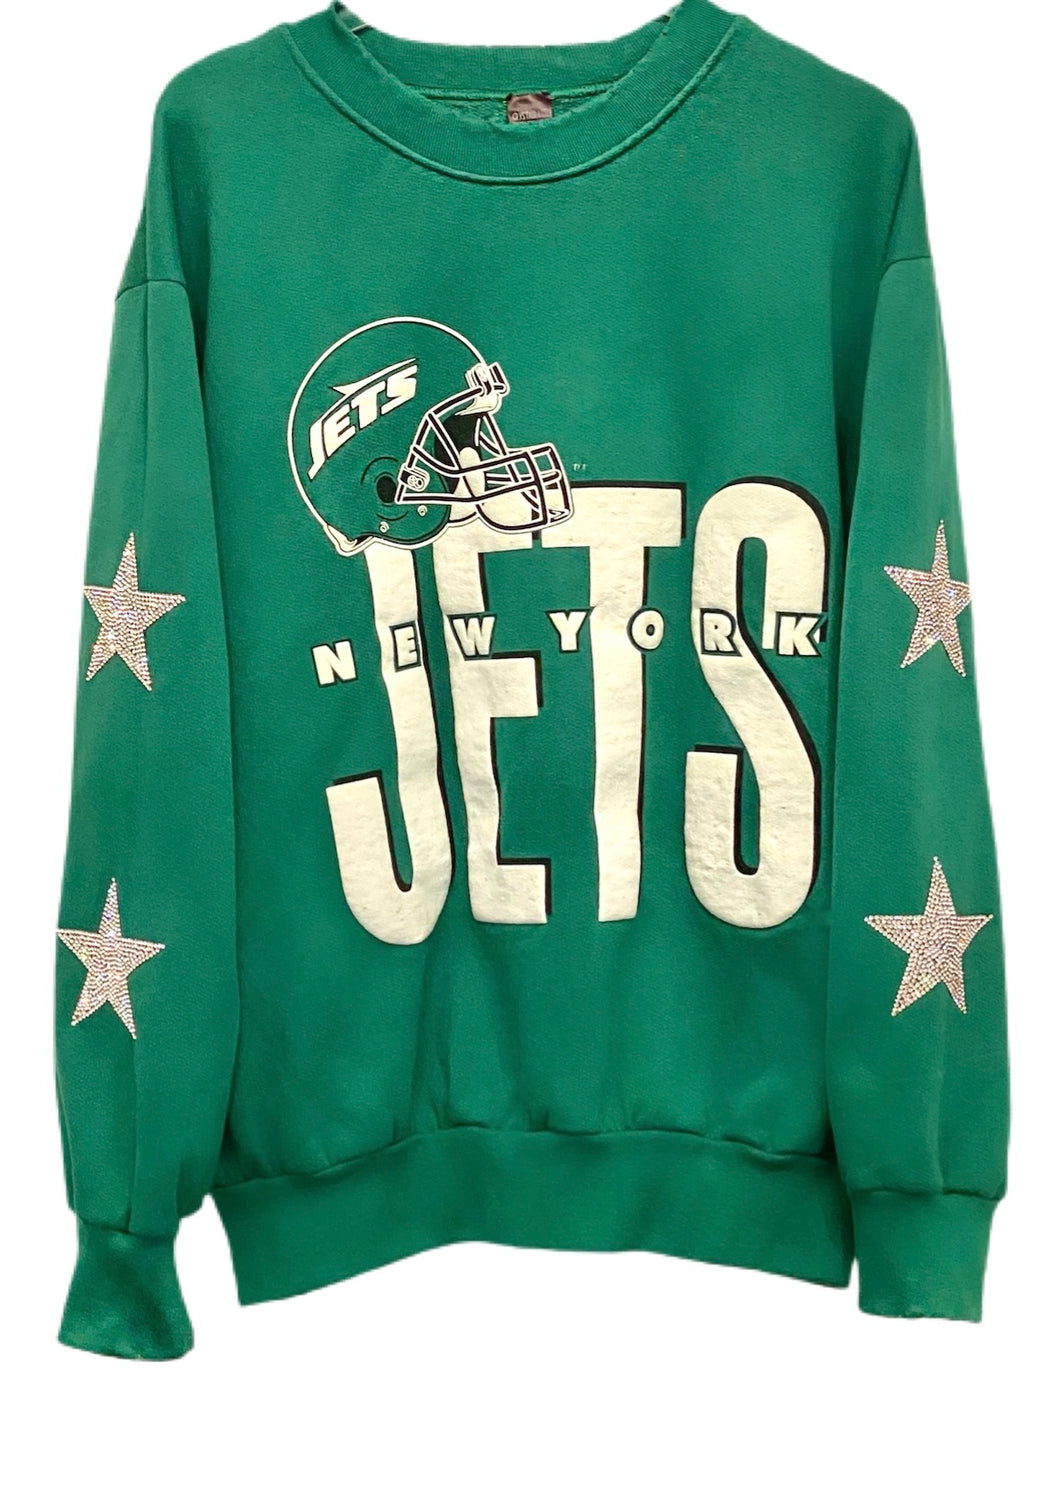 NY Jets, NFL One of a KIND Vintage Sweatshirt with Crystal Star Design